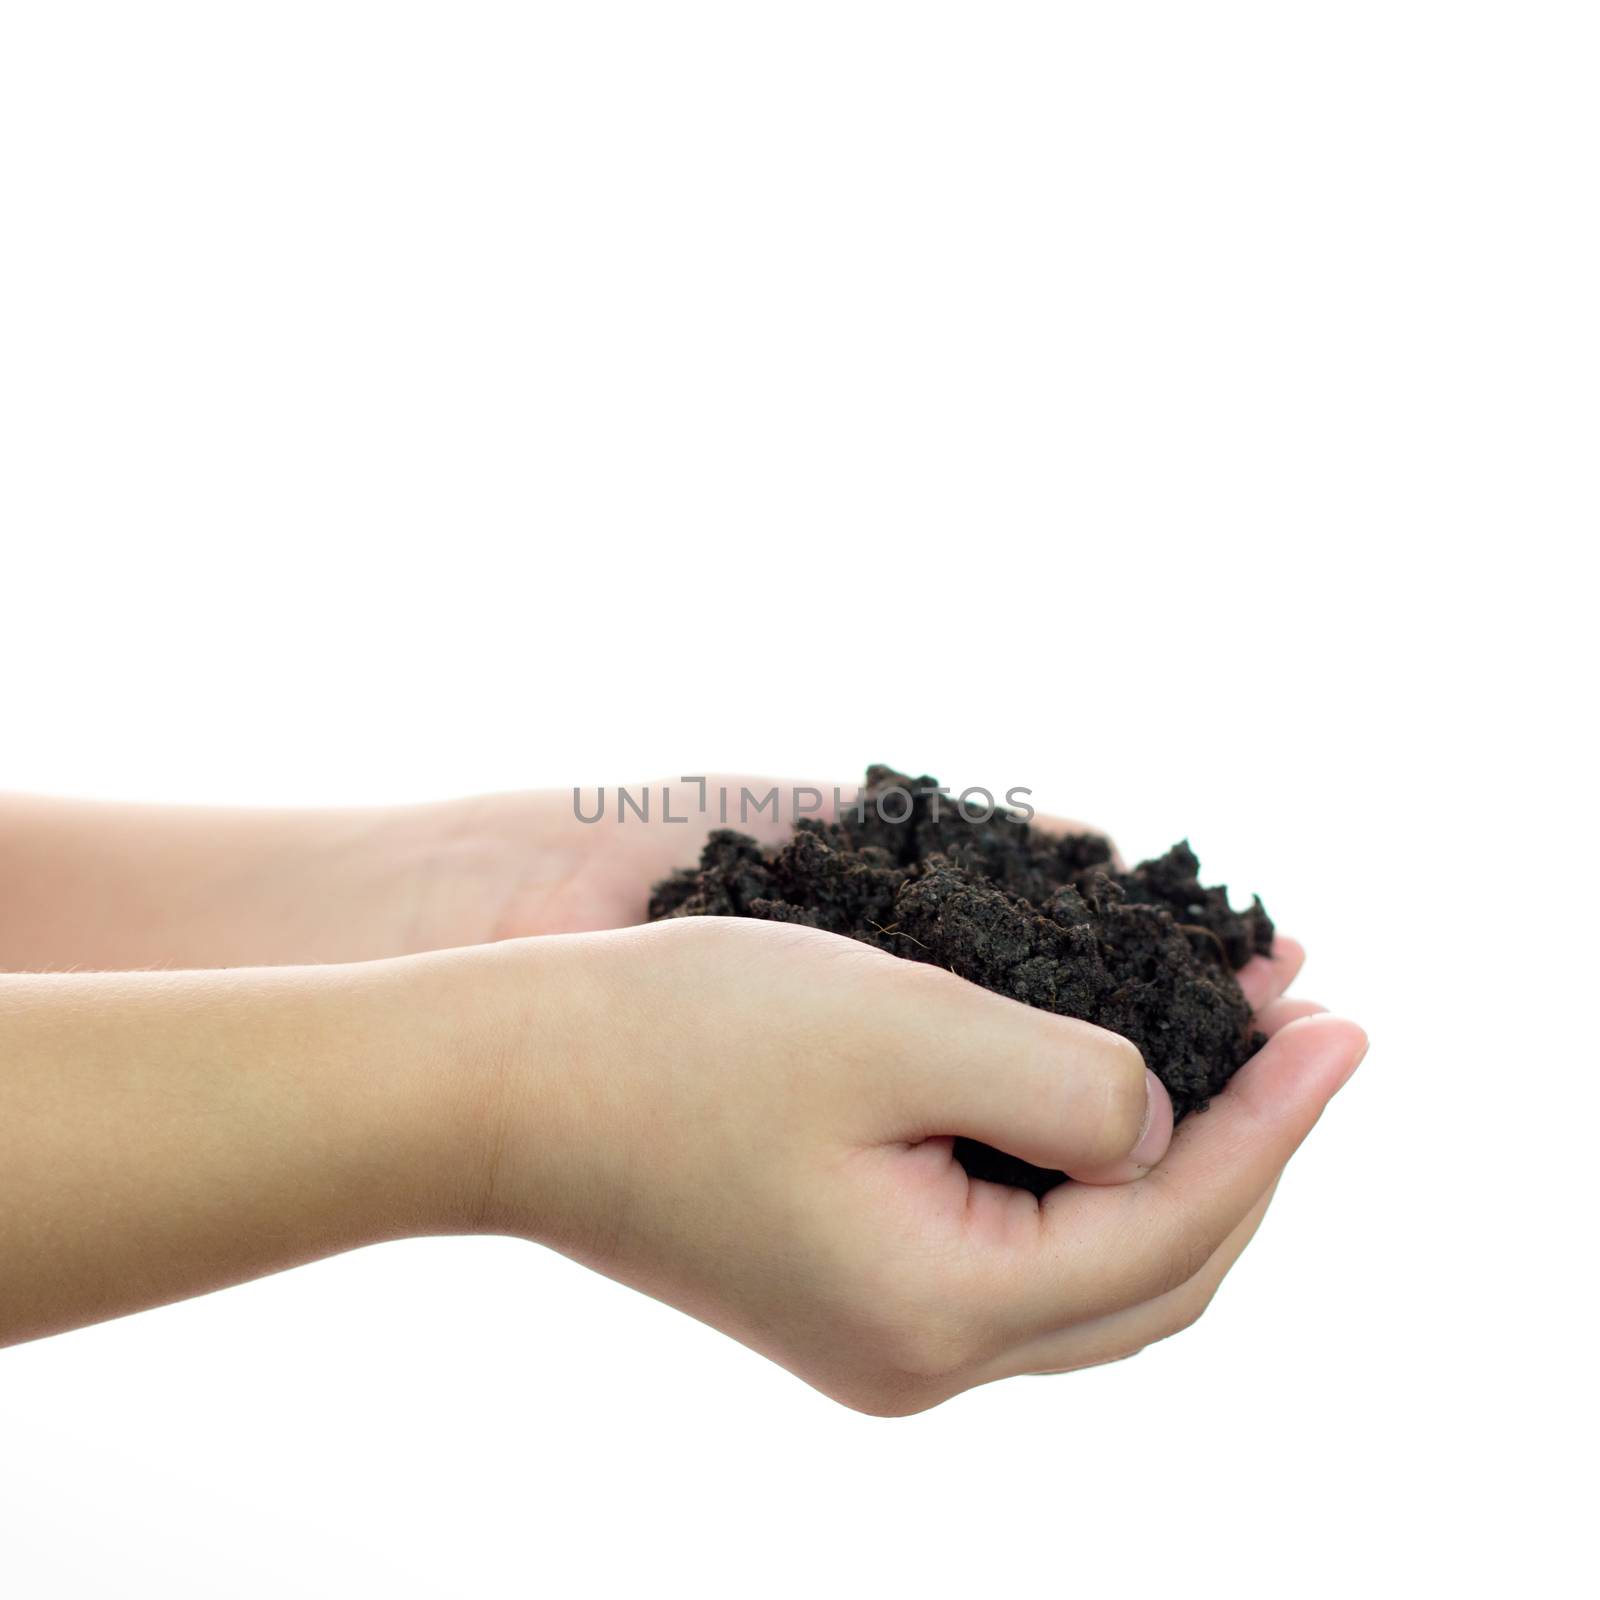 Soil on girl hand by wyoosumran